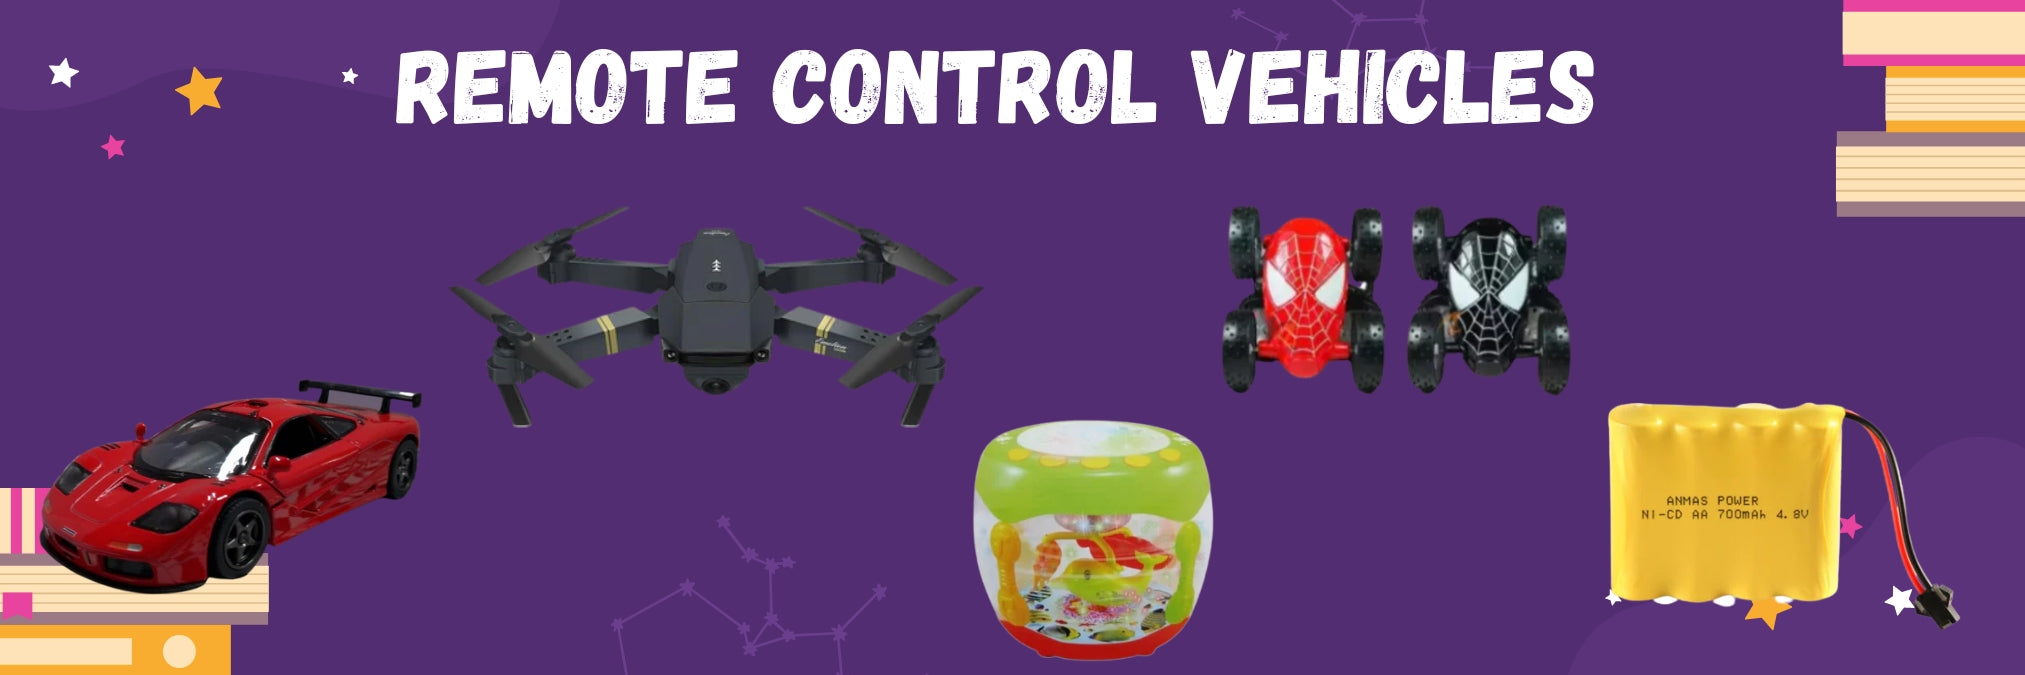 Remote Control Vehicles